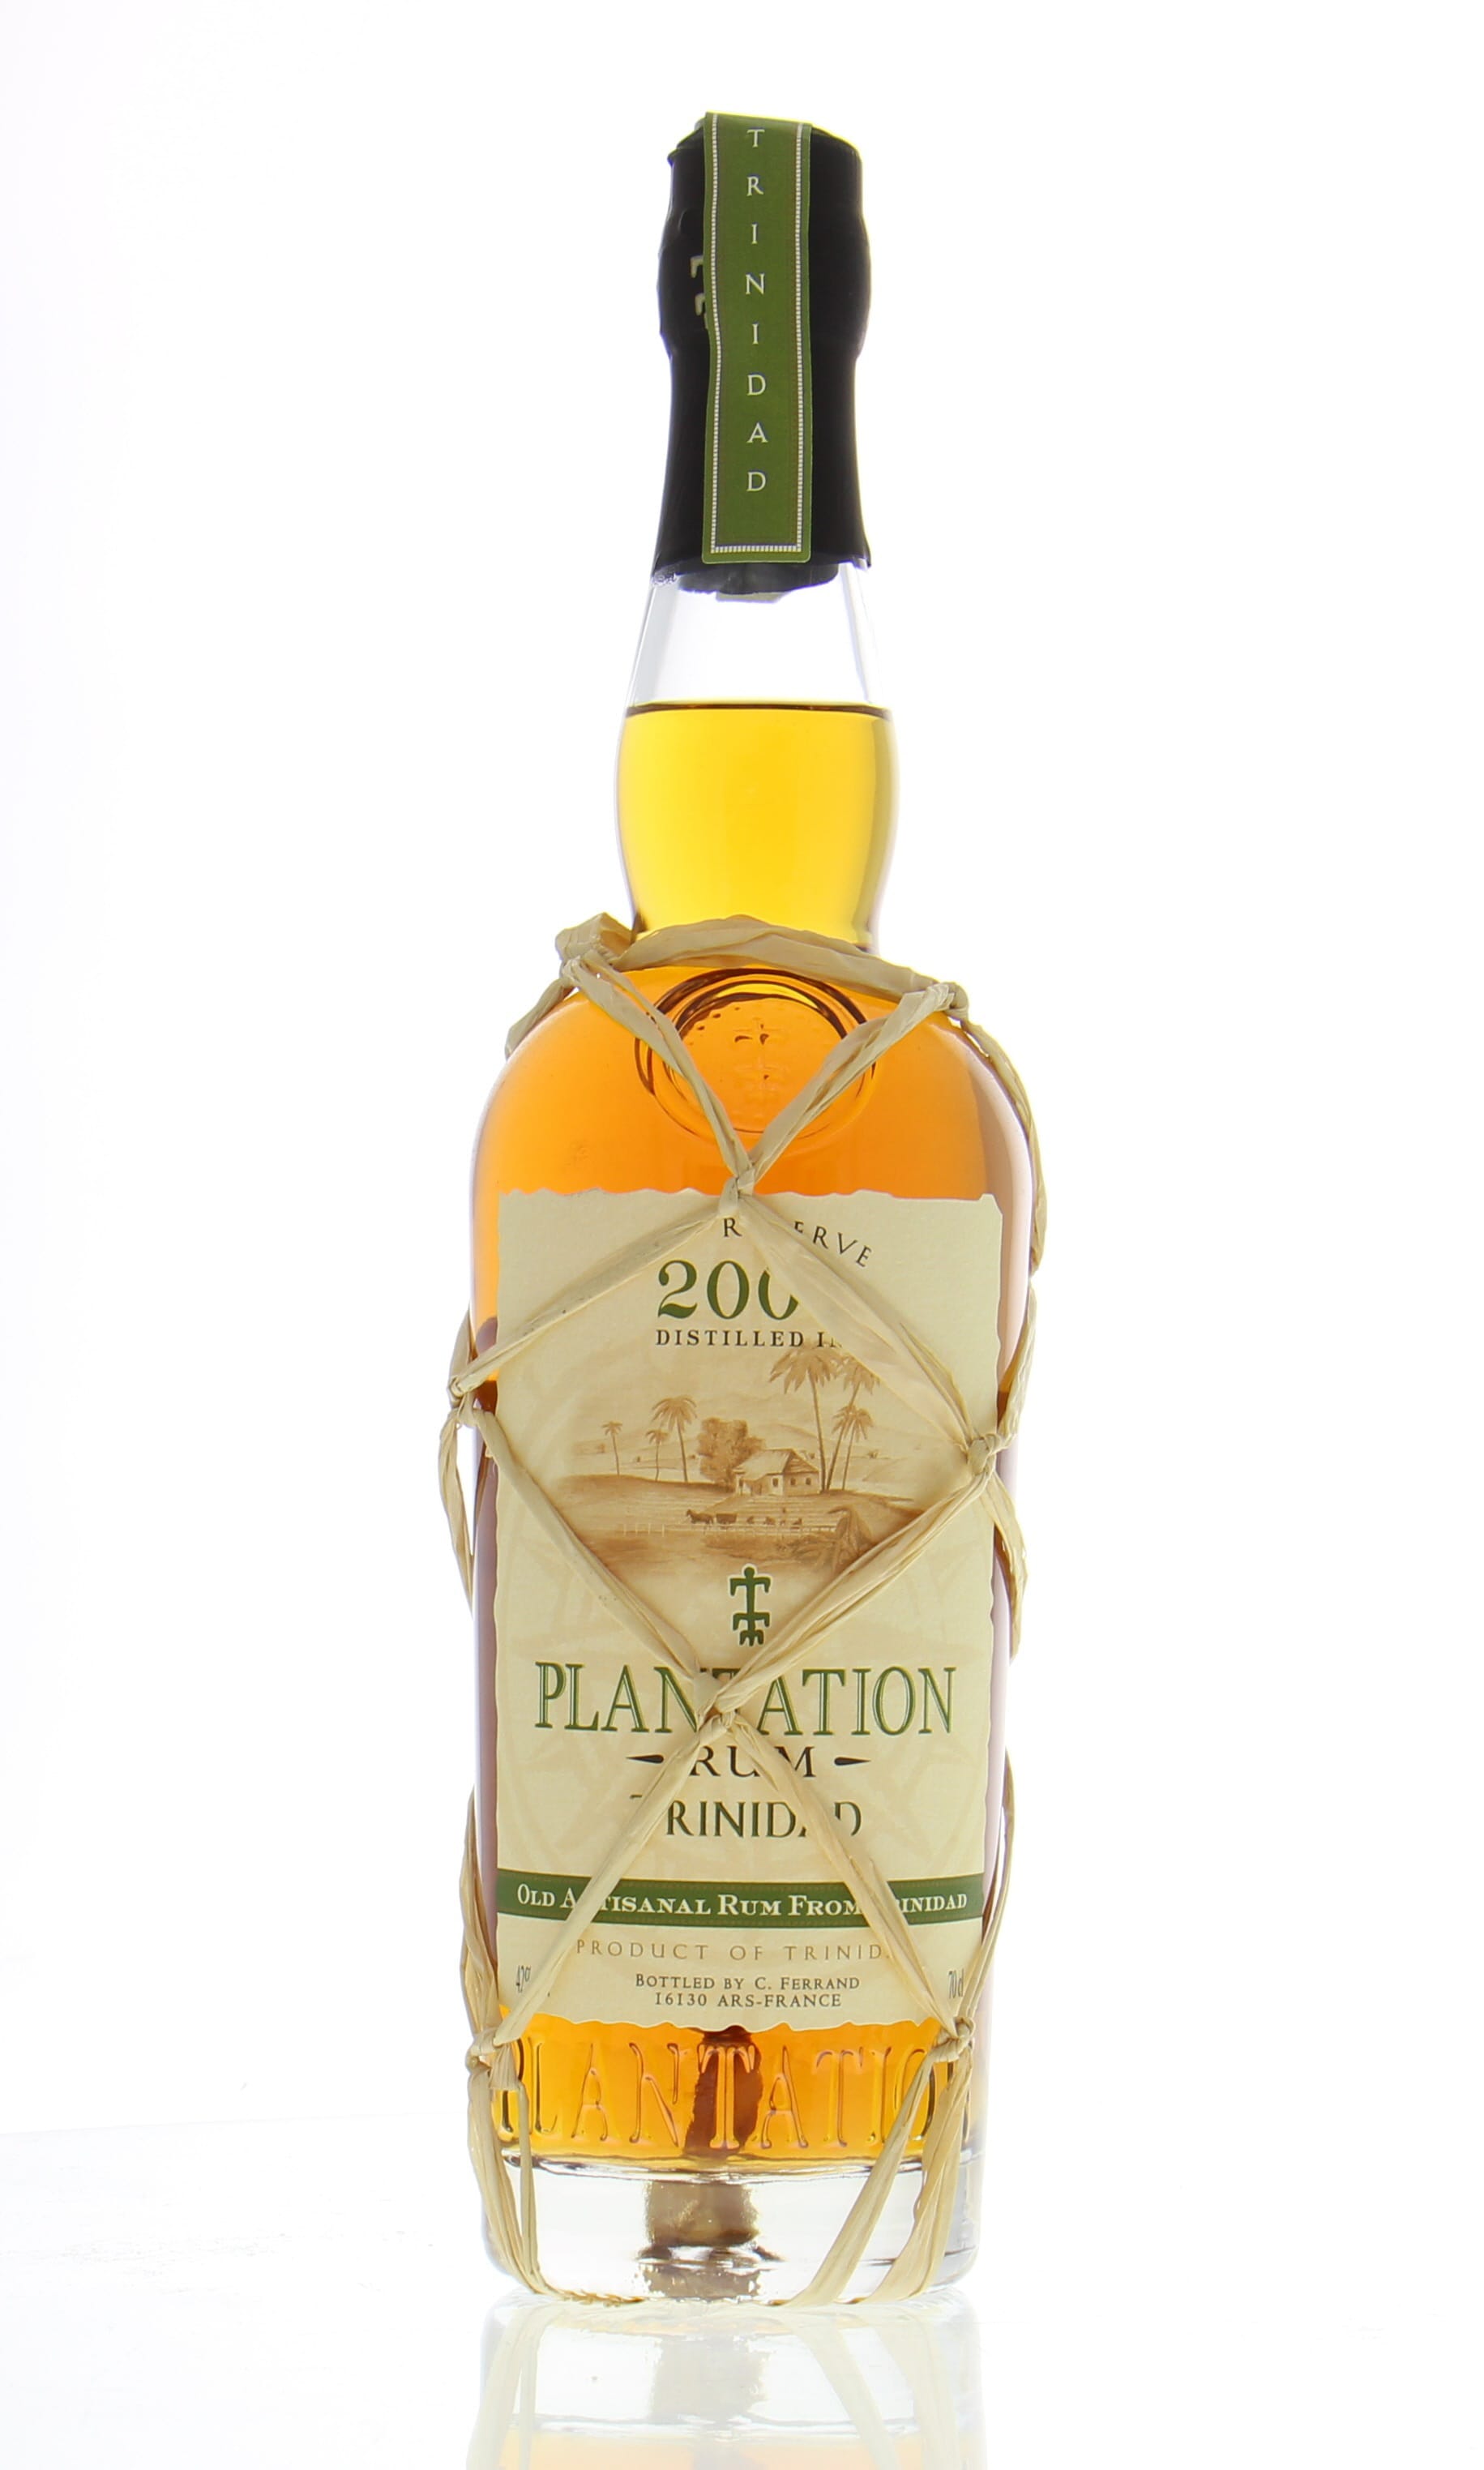 Plantation Rum - Trinidad old reserve 2001 42% 2001 Perfect